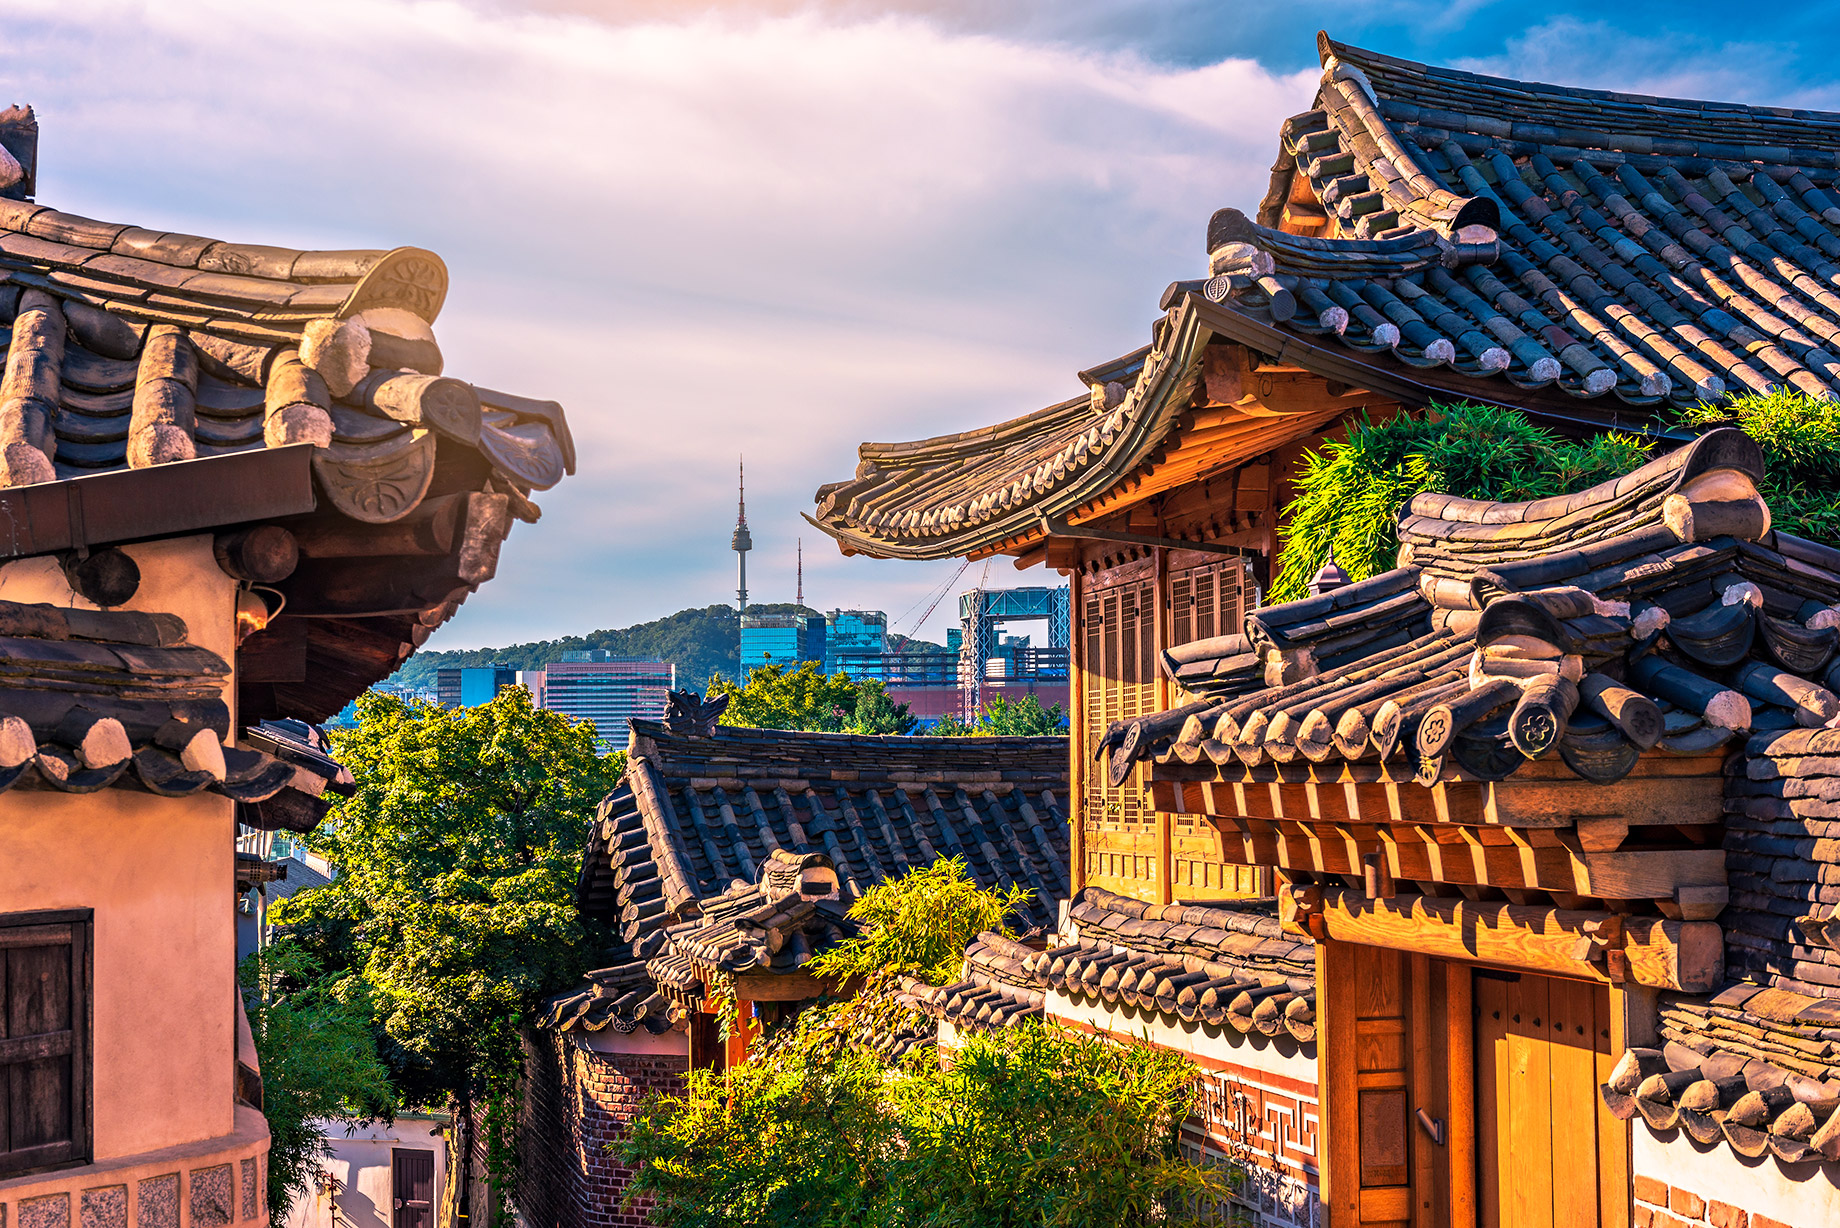 Pagoda Roof Design - Bukchon Hanok Village - Seoul, South Korea